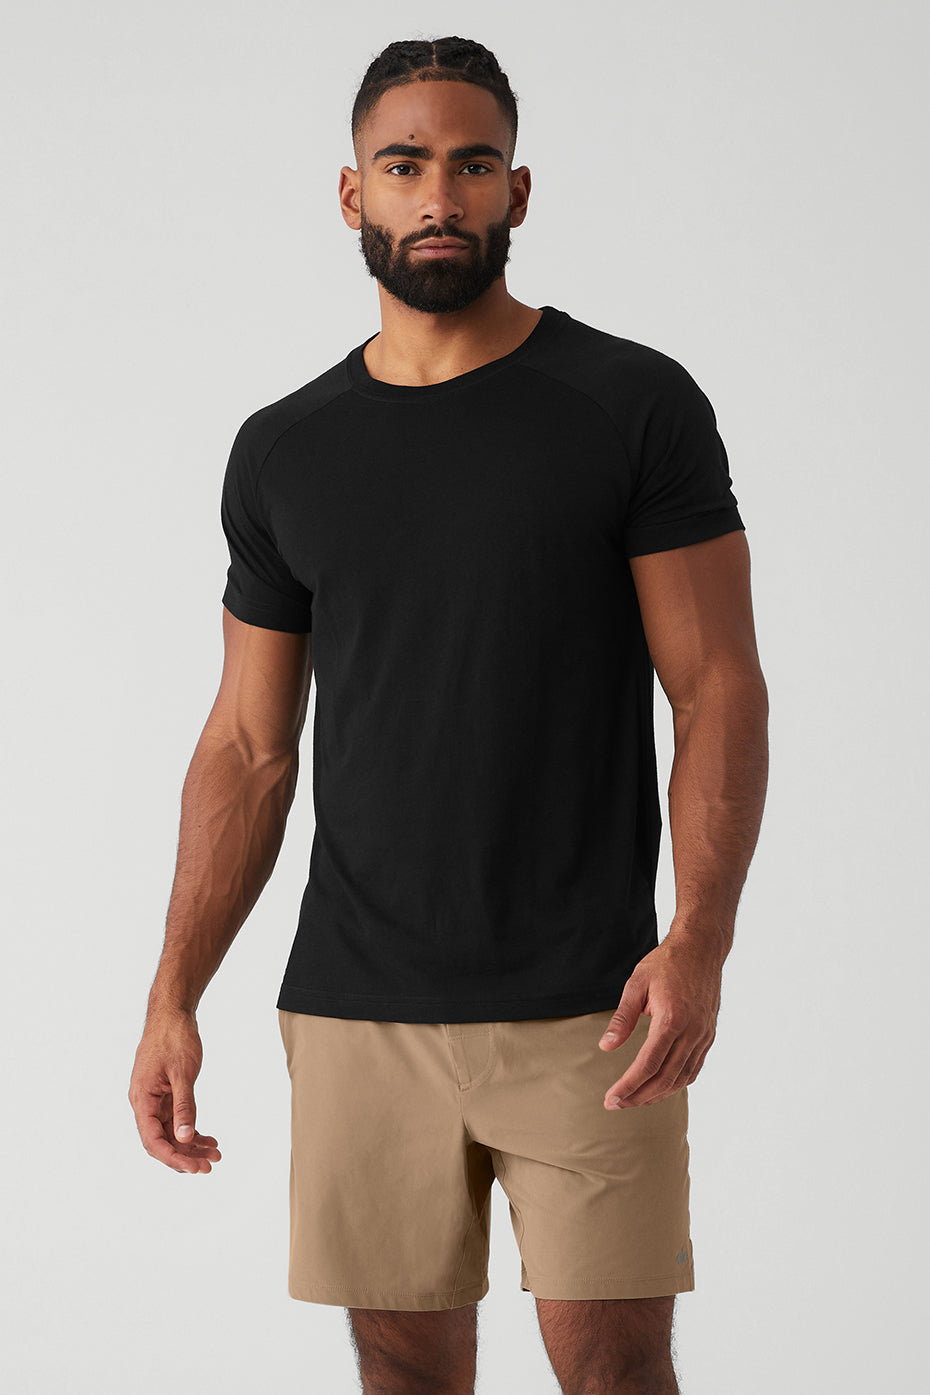 Men's Alo Yoga Sweatshirts from $68